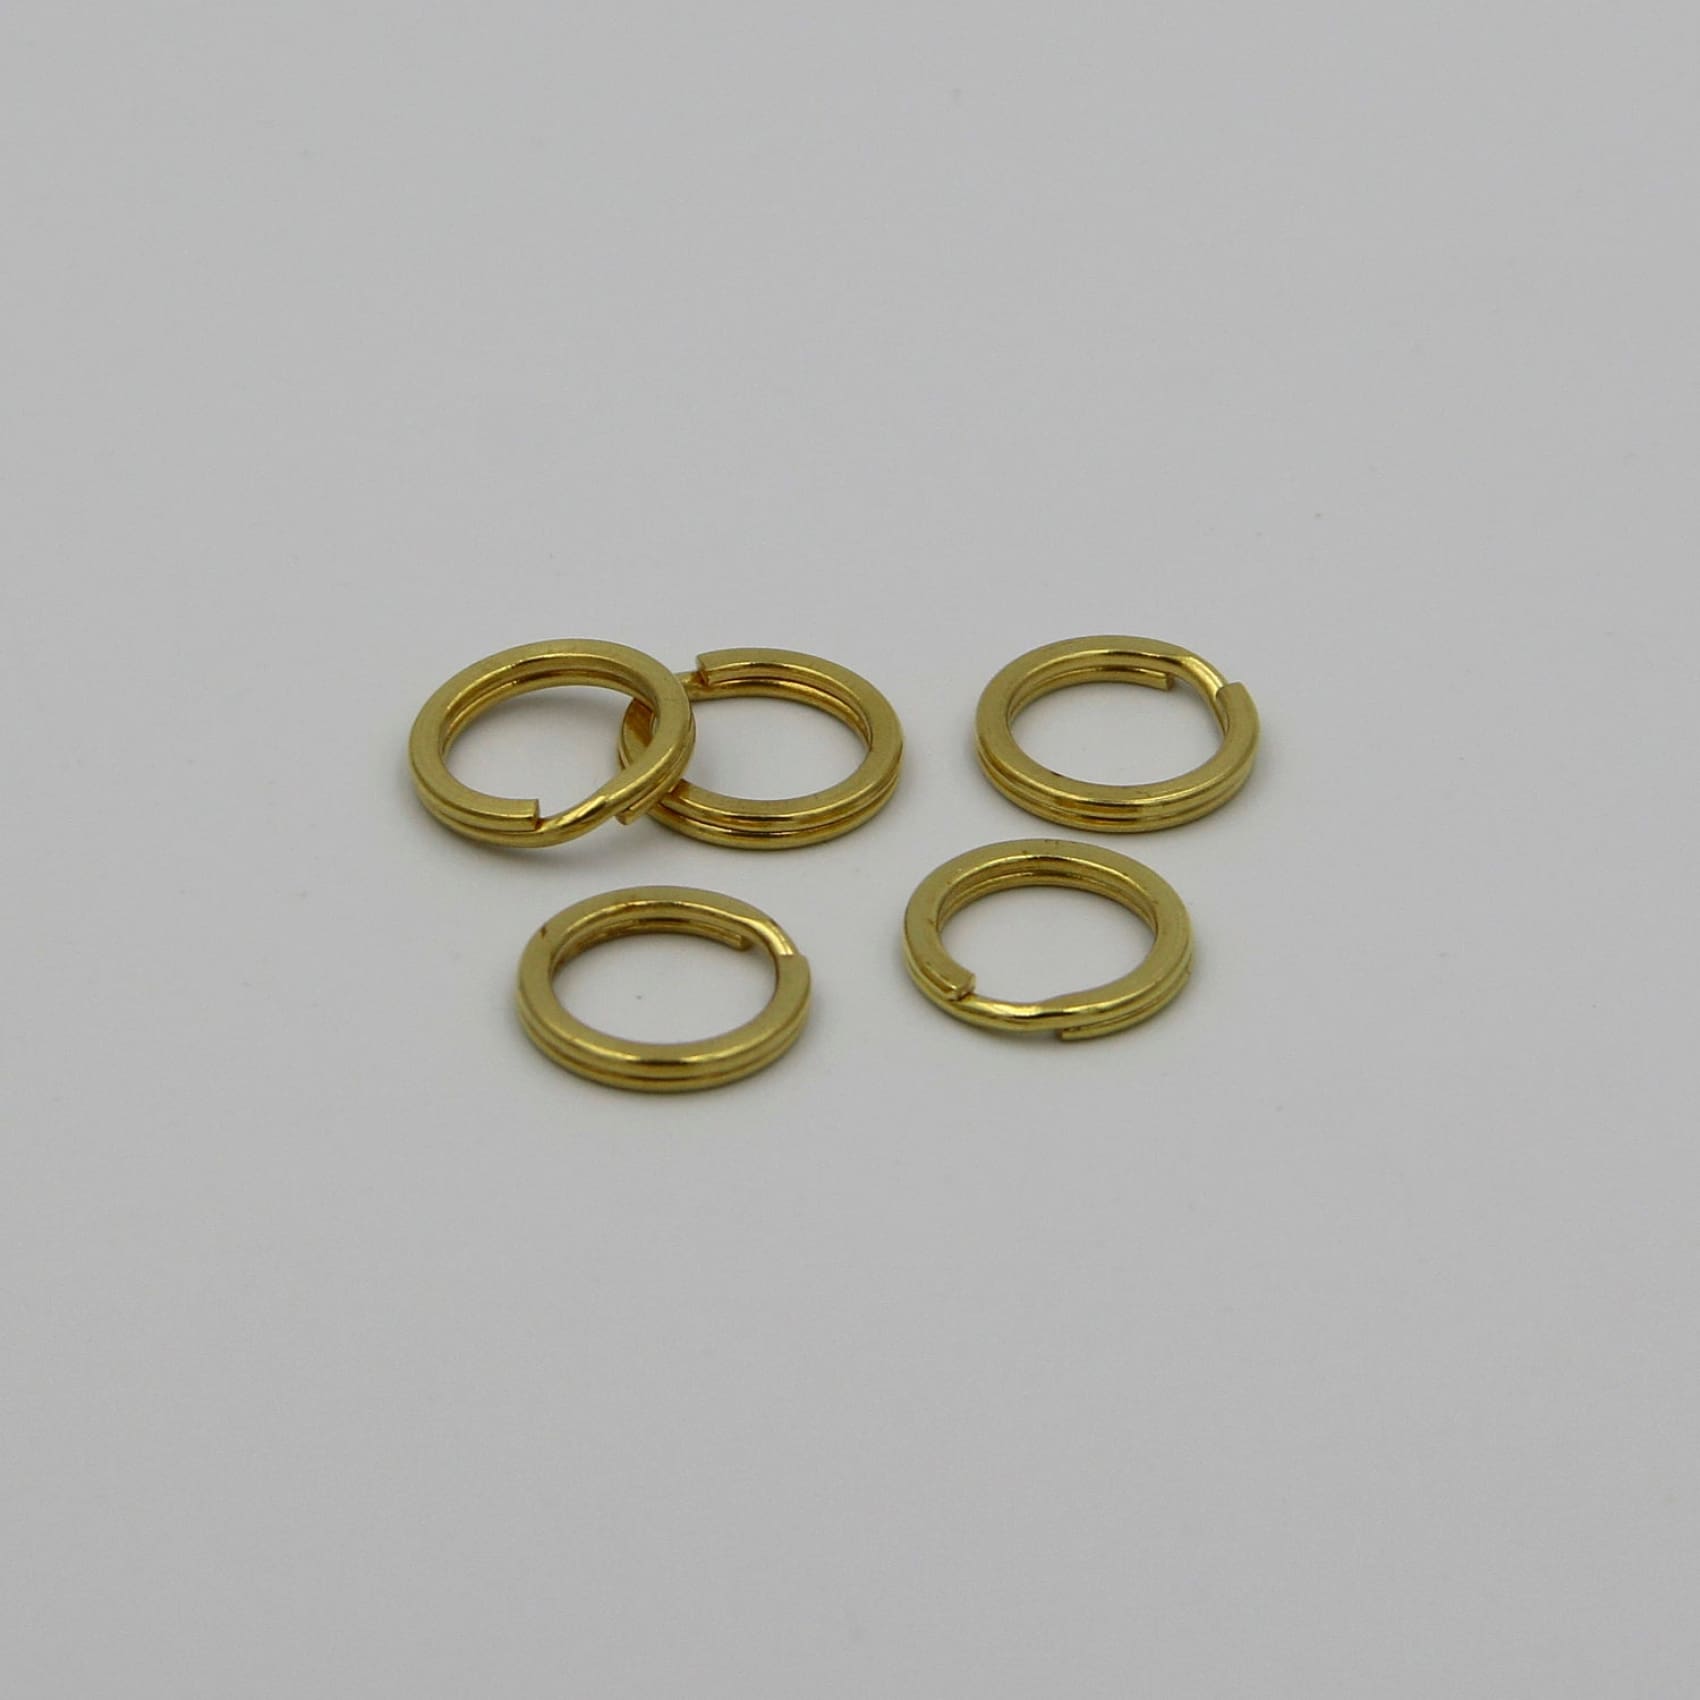 Copper Key Rings Split Ring Brass Connectors Flat Shape Keyring - 15mm / 1pcs - keyrings